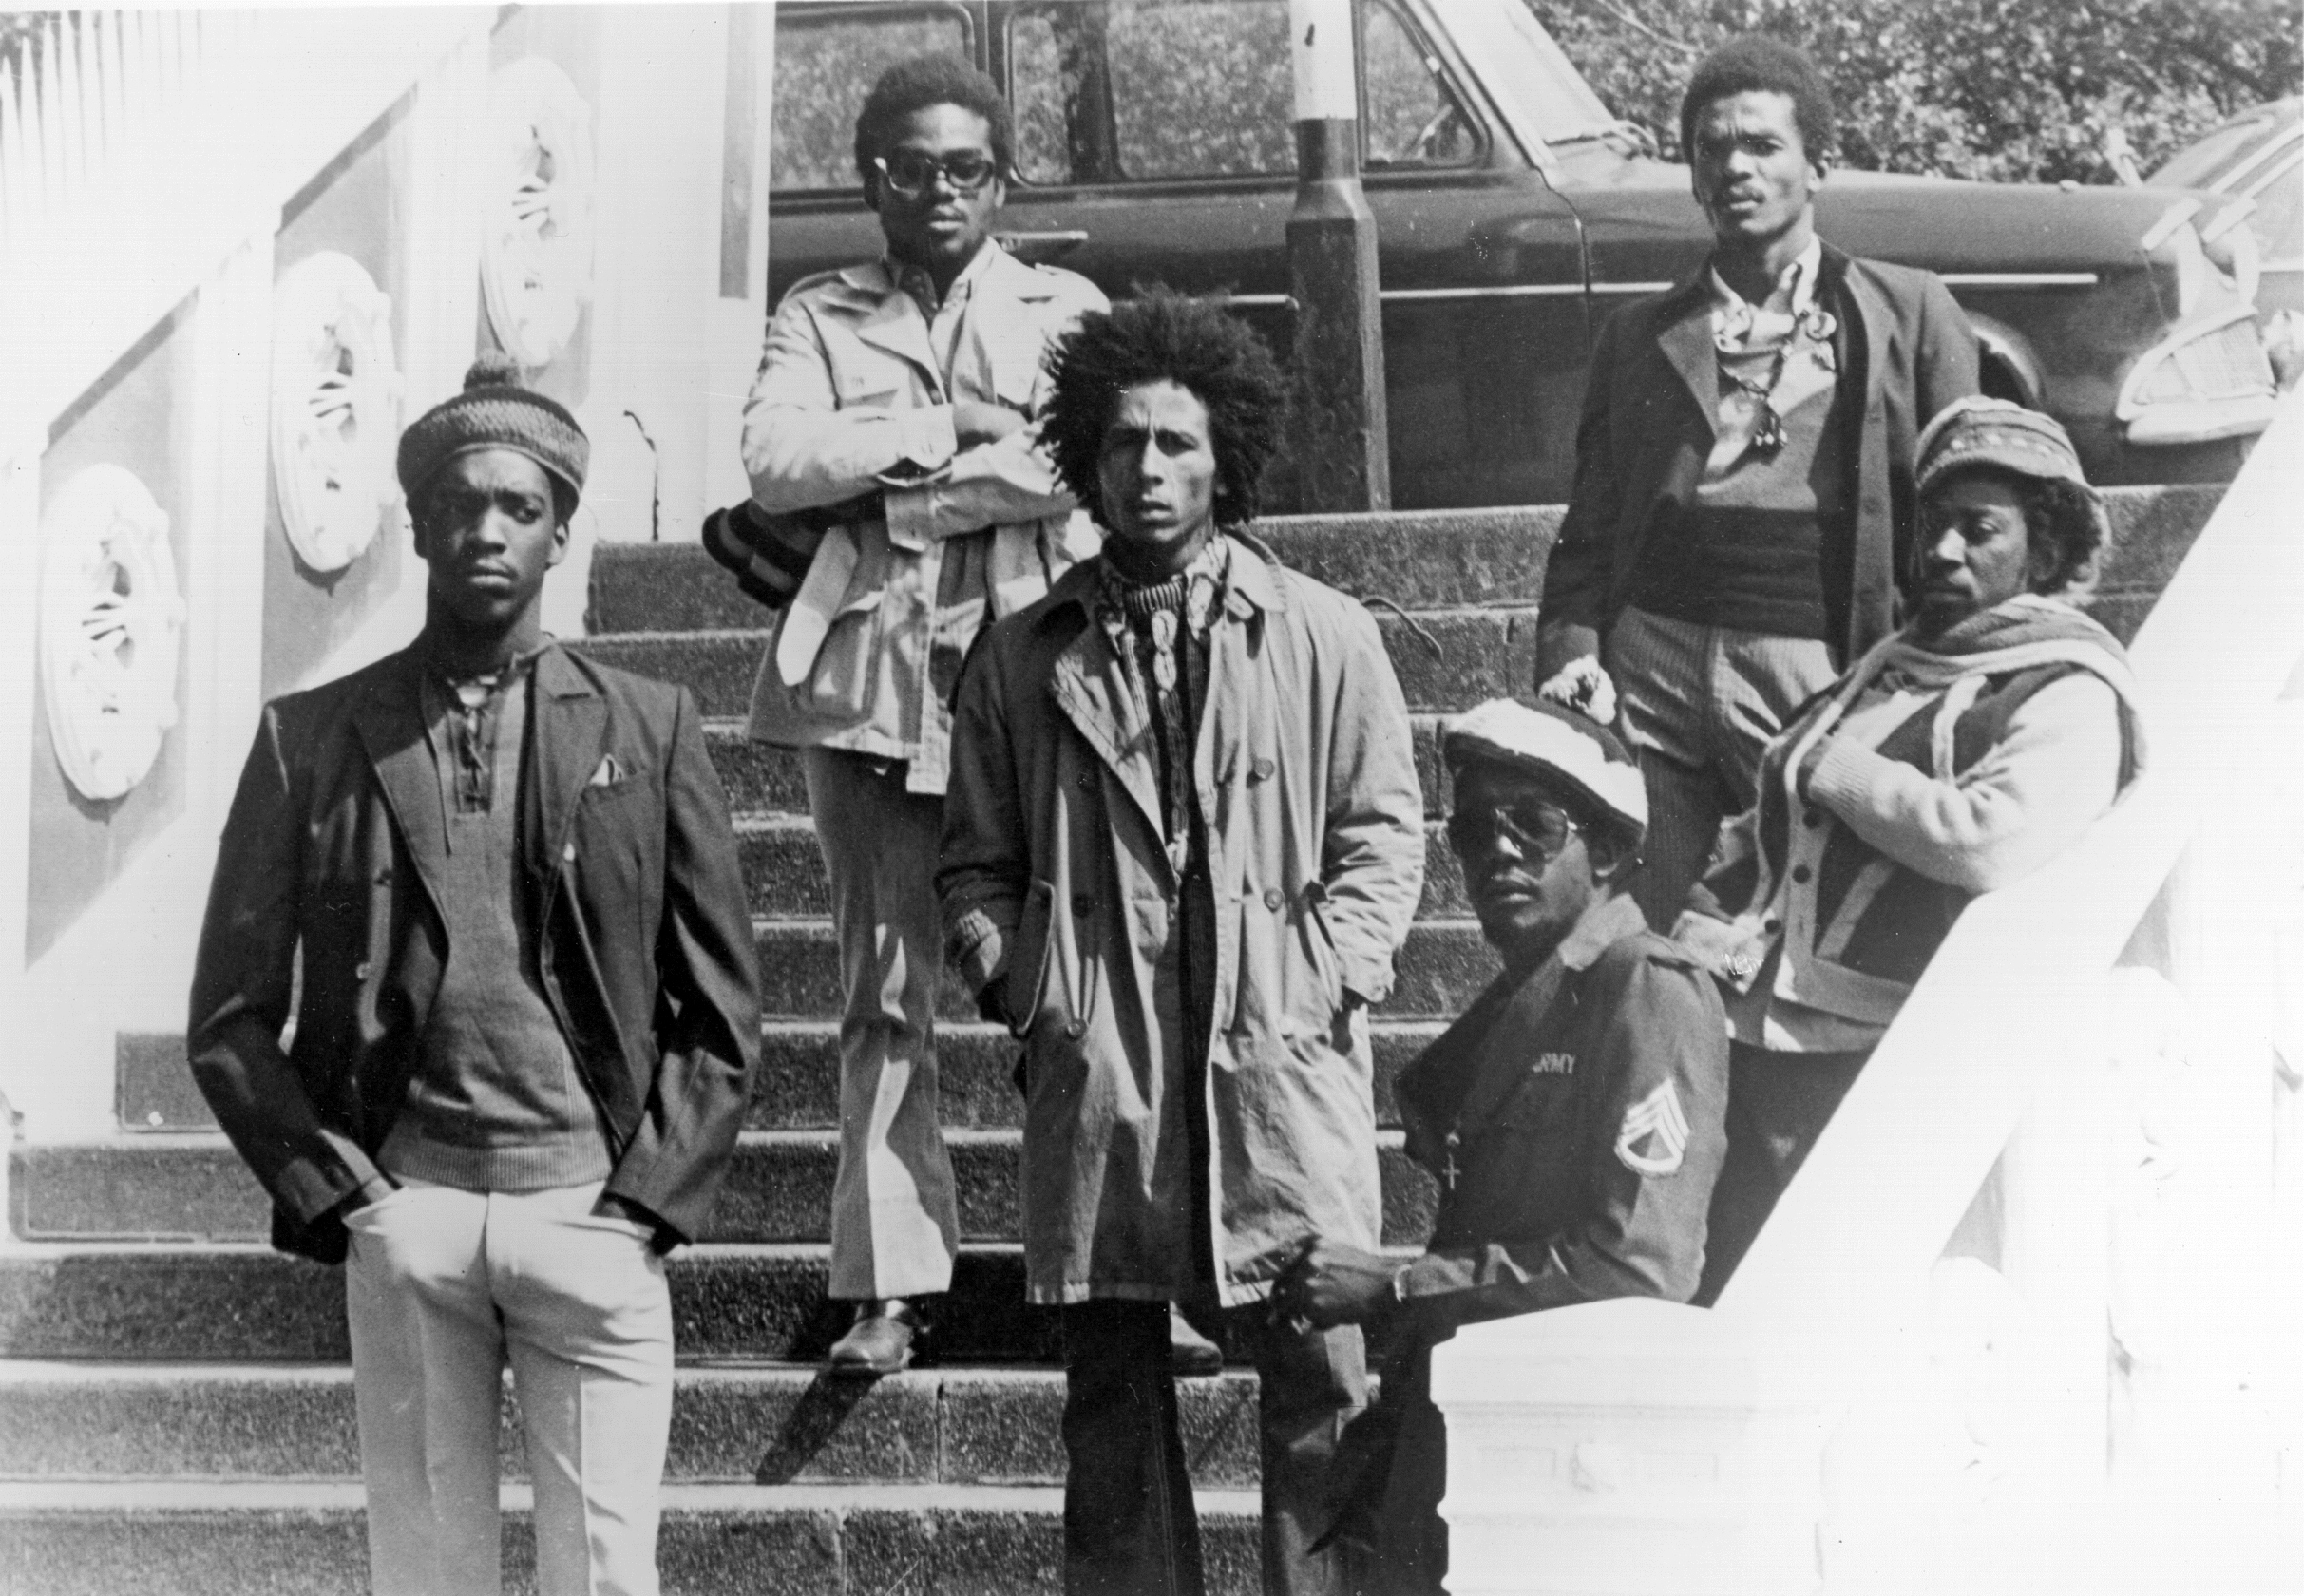 Jamaican Roots - The Wailers vs Bob Marley